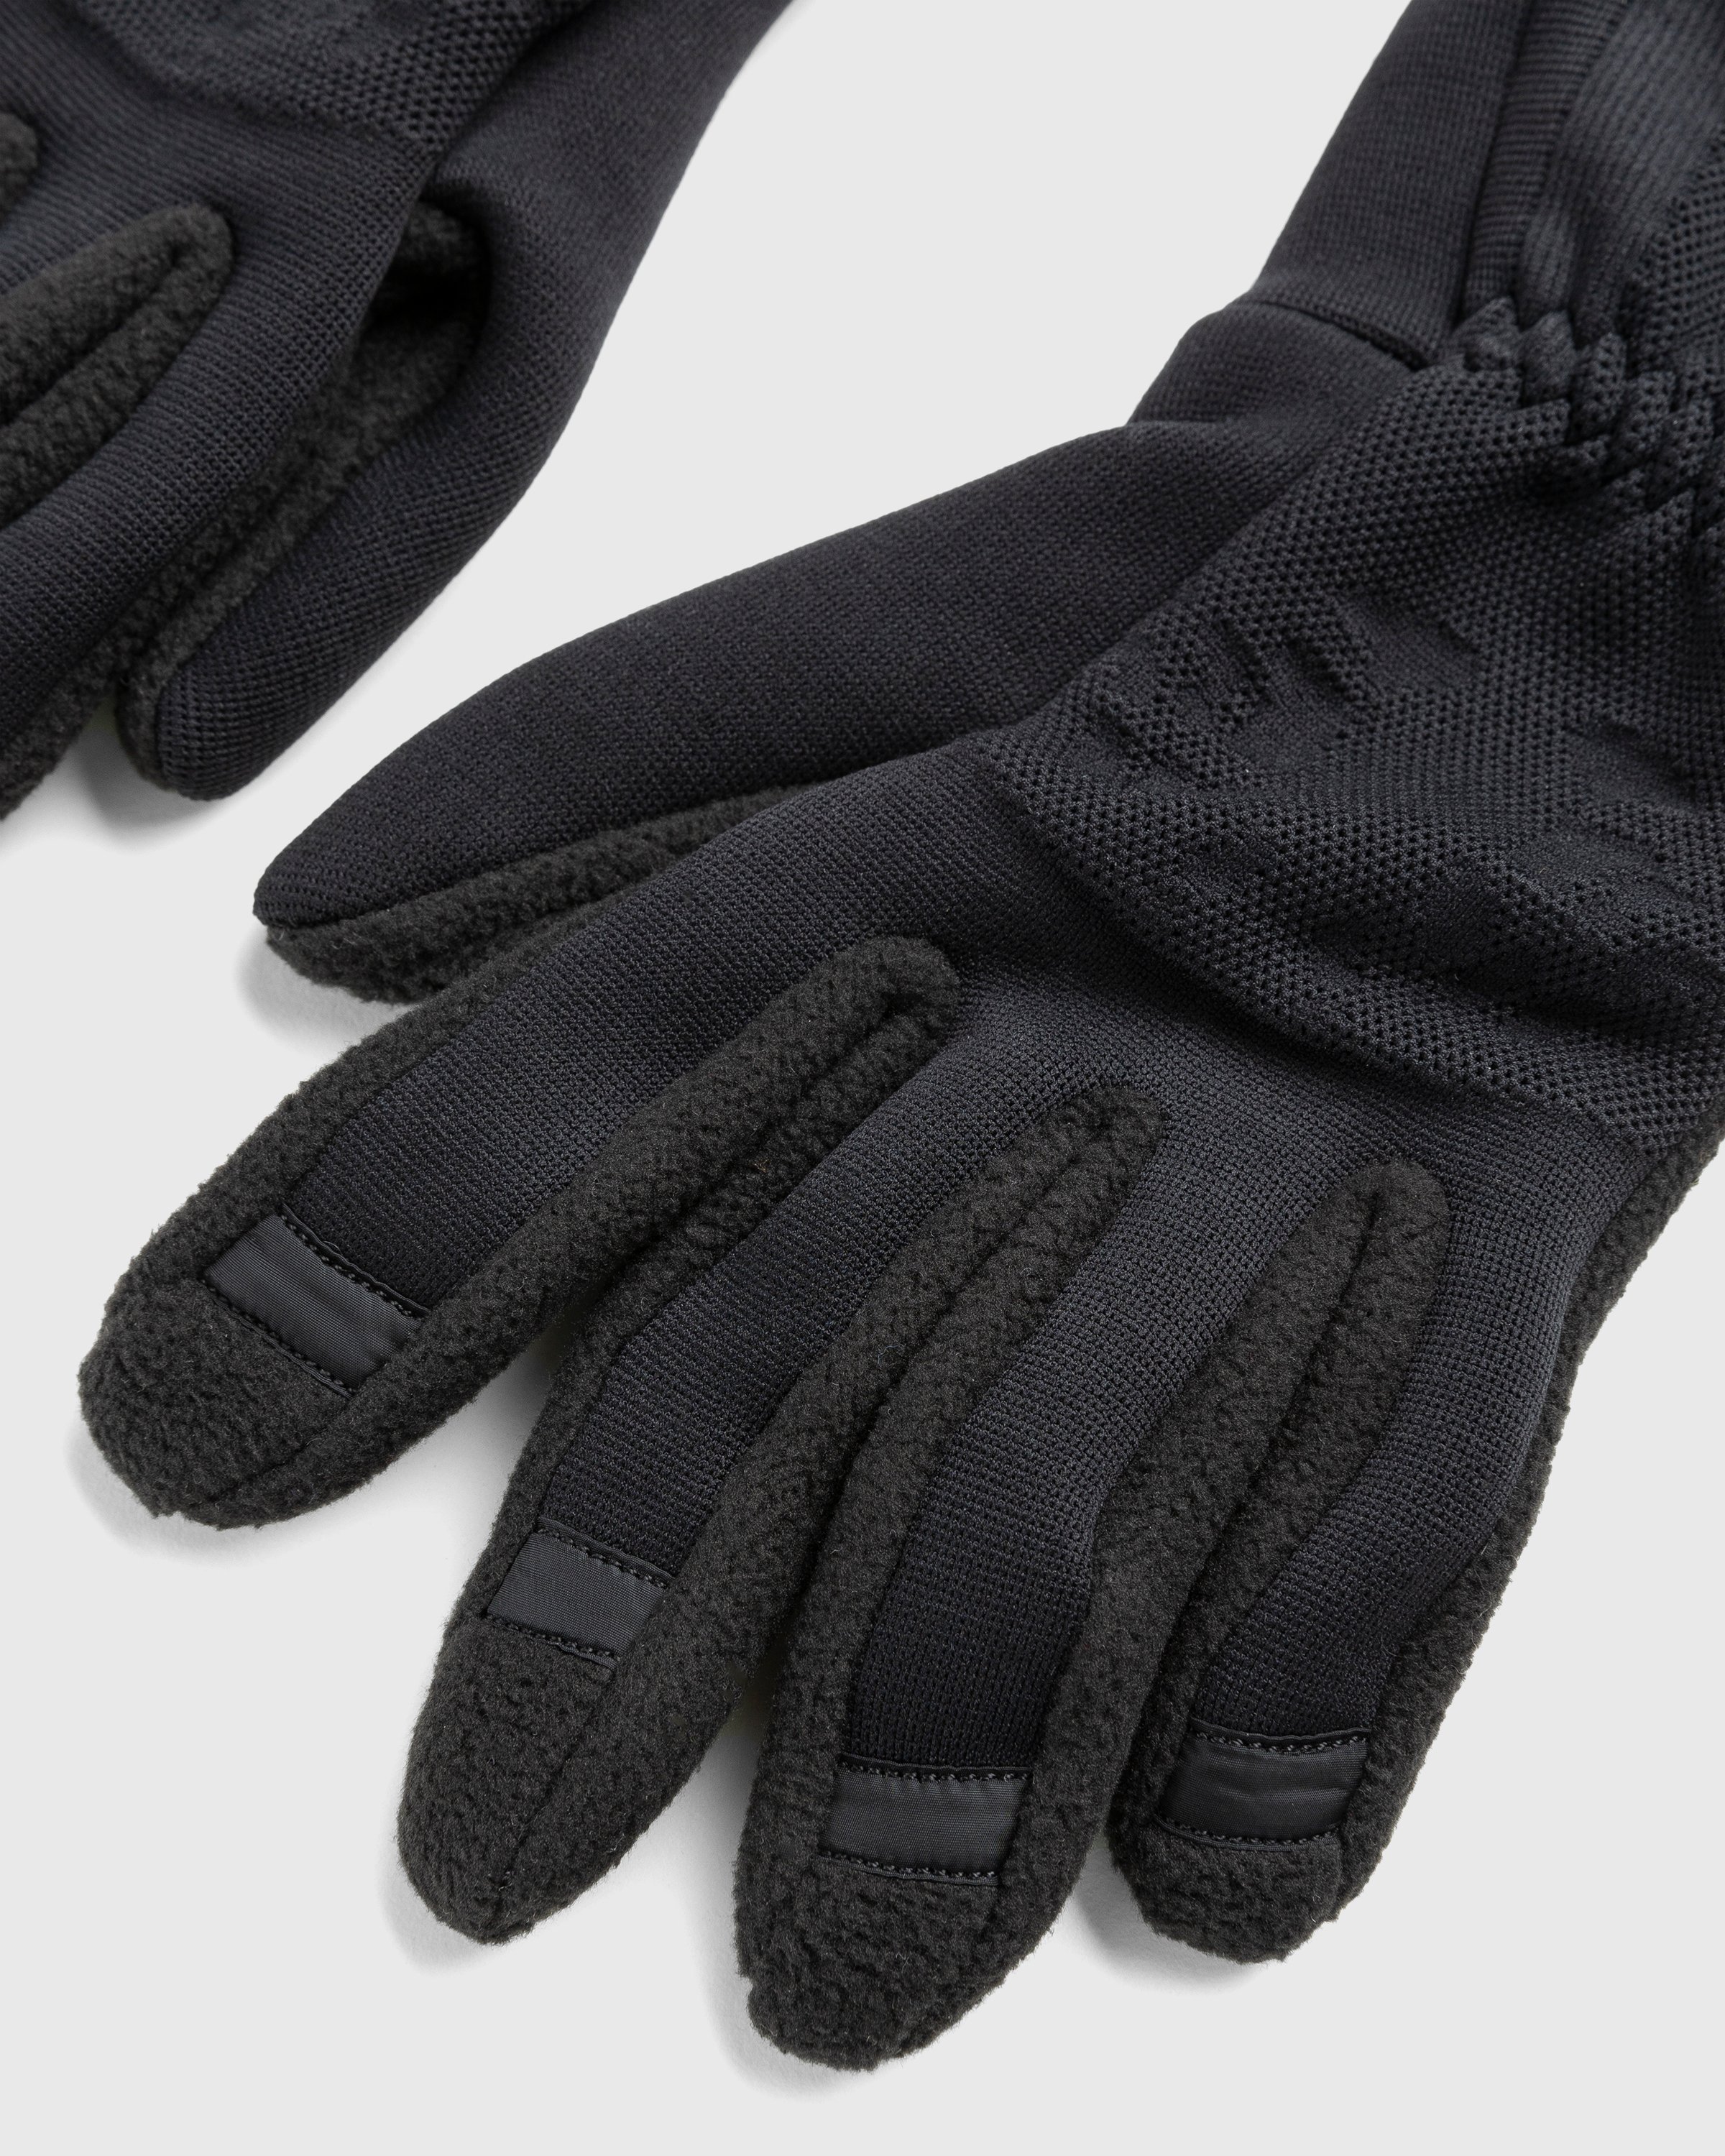 C.P. Company - Seamless Gloves Black - Accessories - Black - Image 5